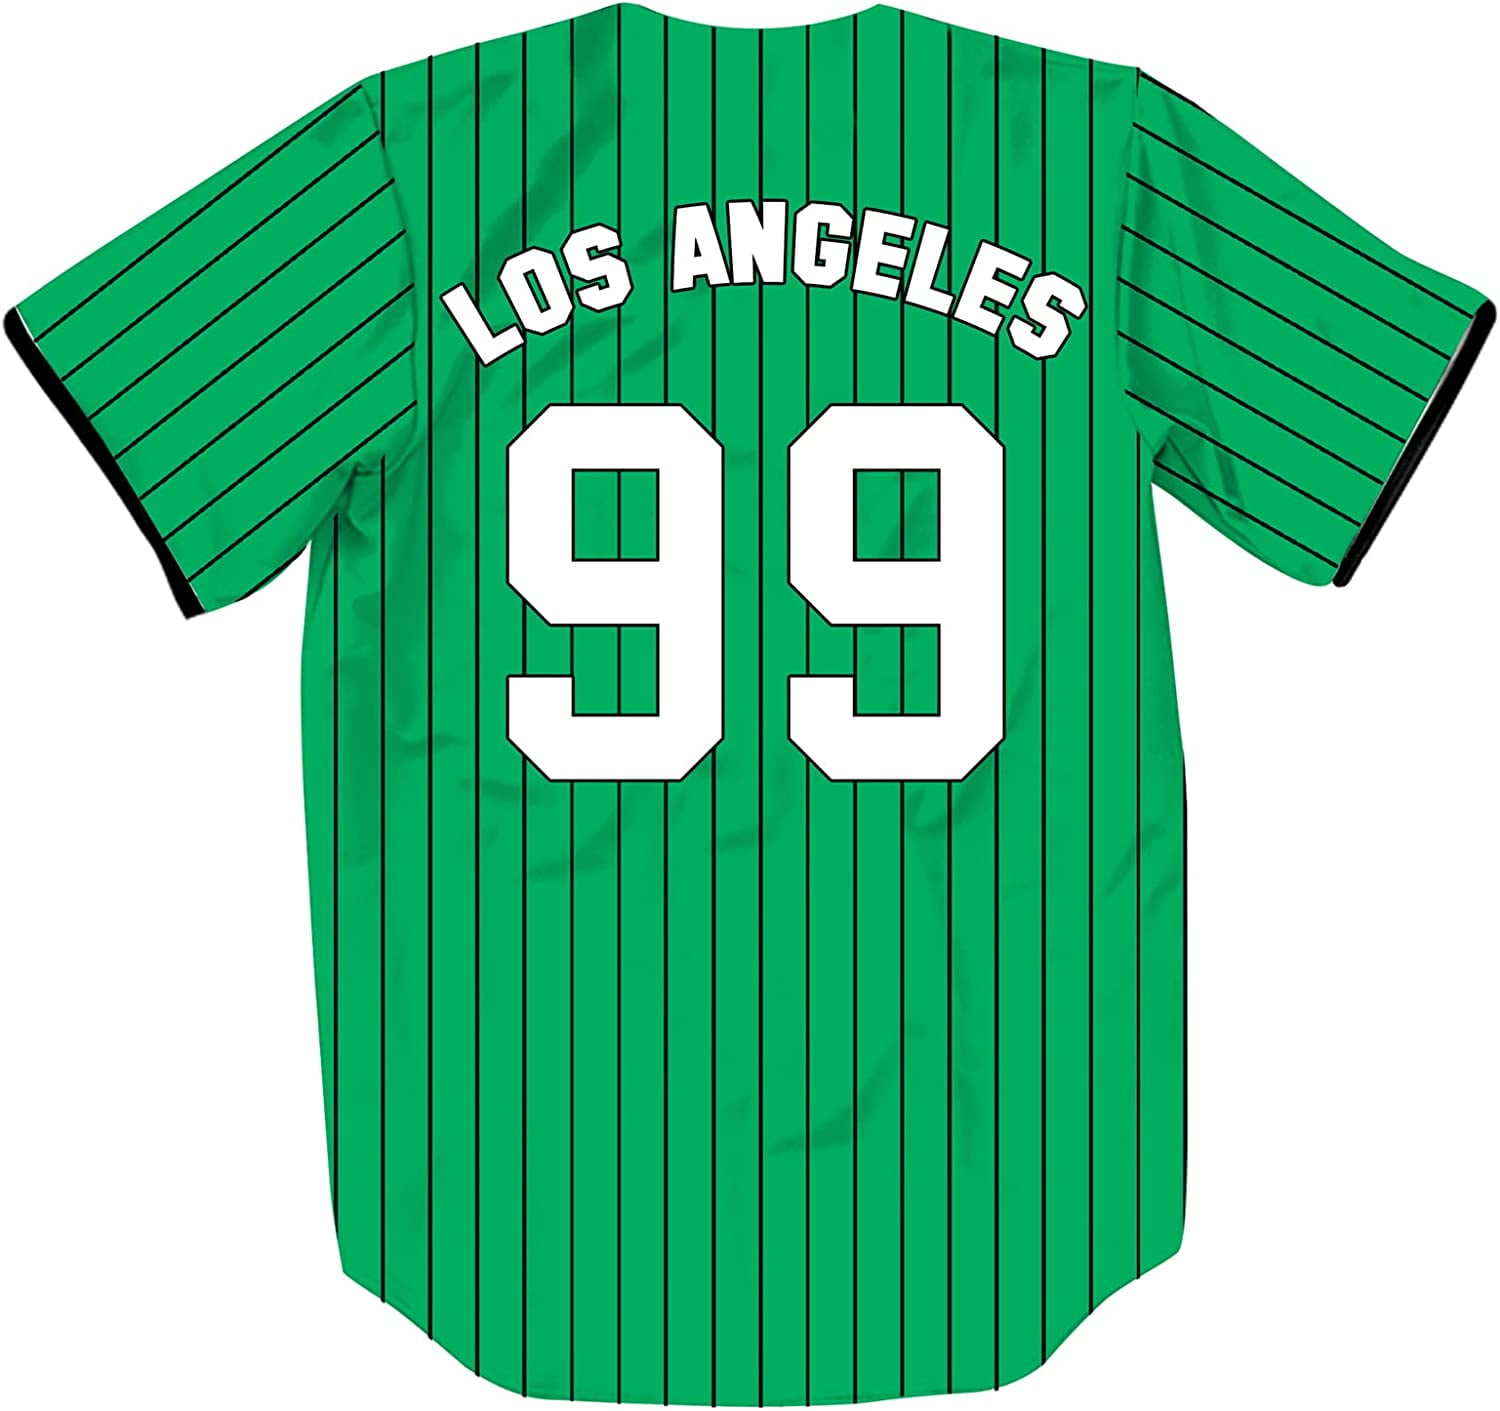 Los Angeles 99 Printed Baseball Jersey LA Baseball Team Shirts for